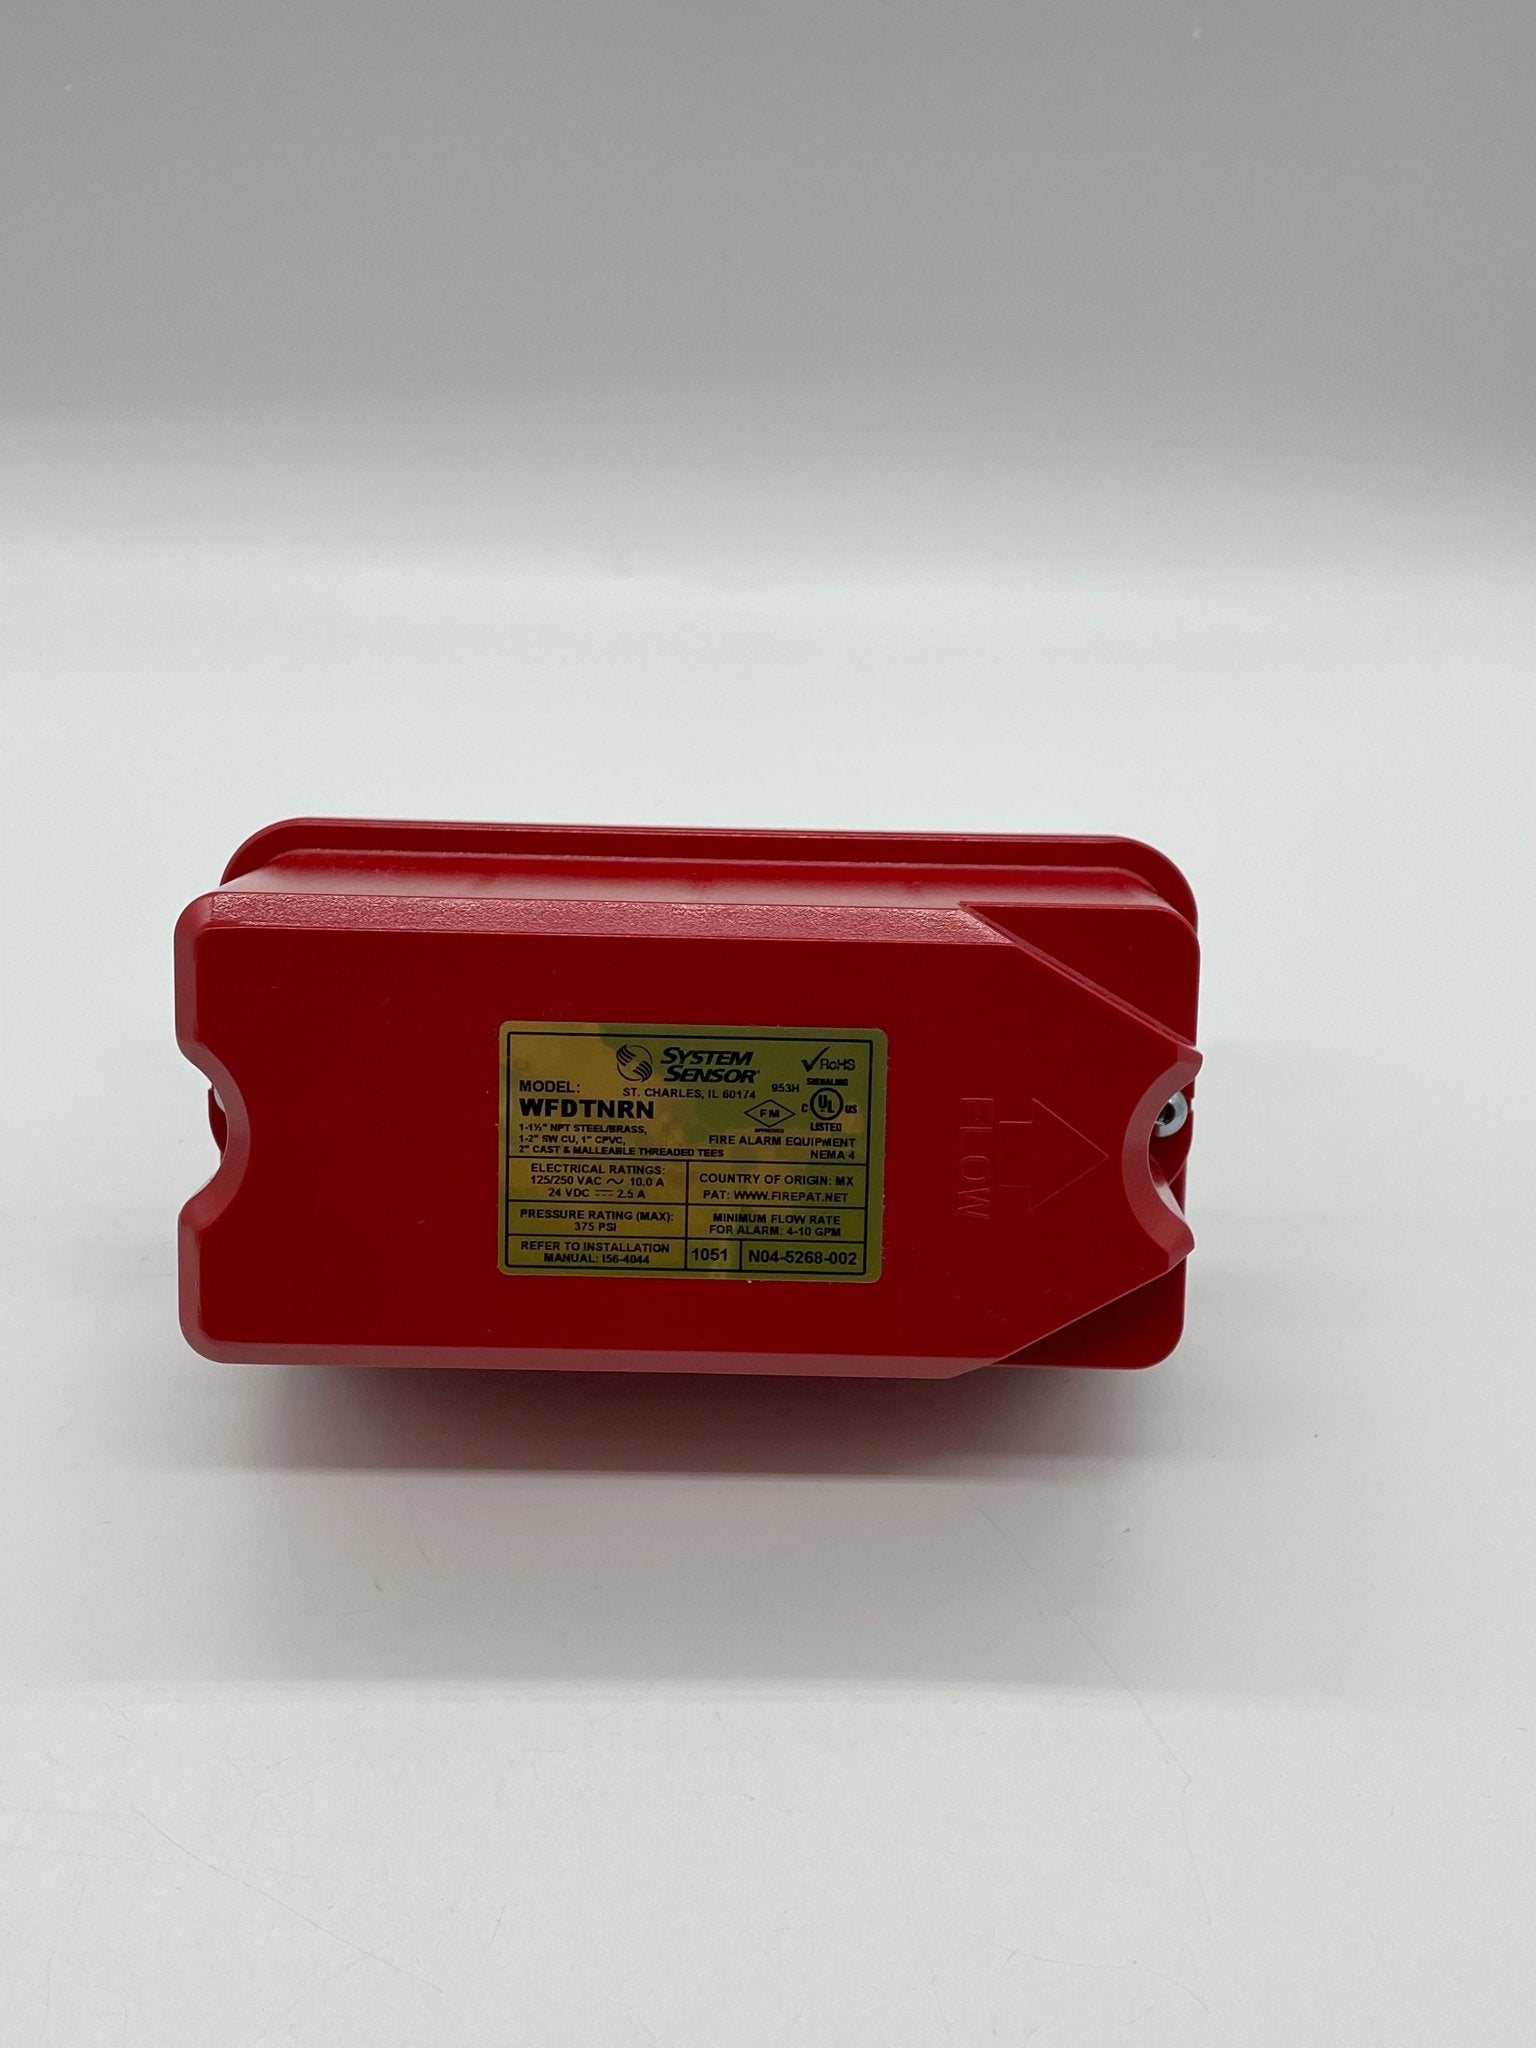 Firelite WFDTNRN - The Fire Alarm Supplier